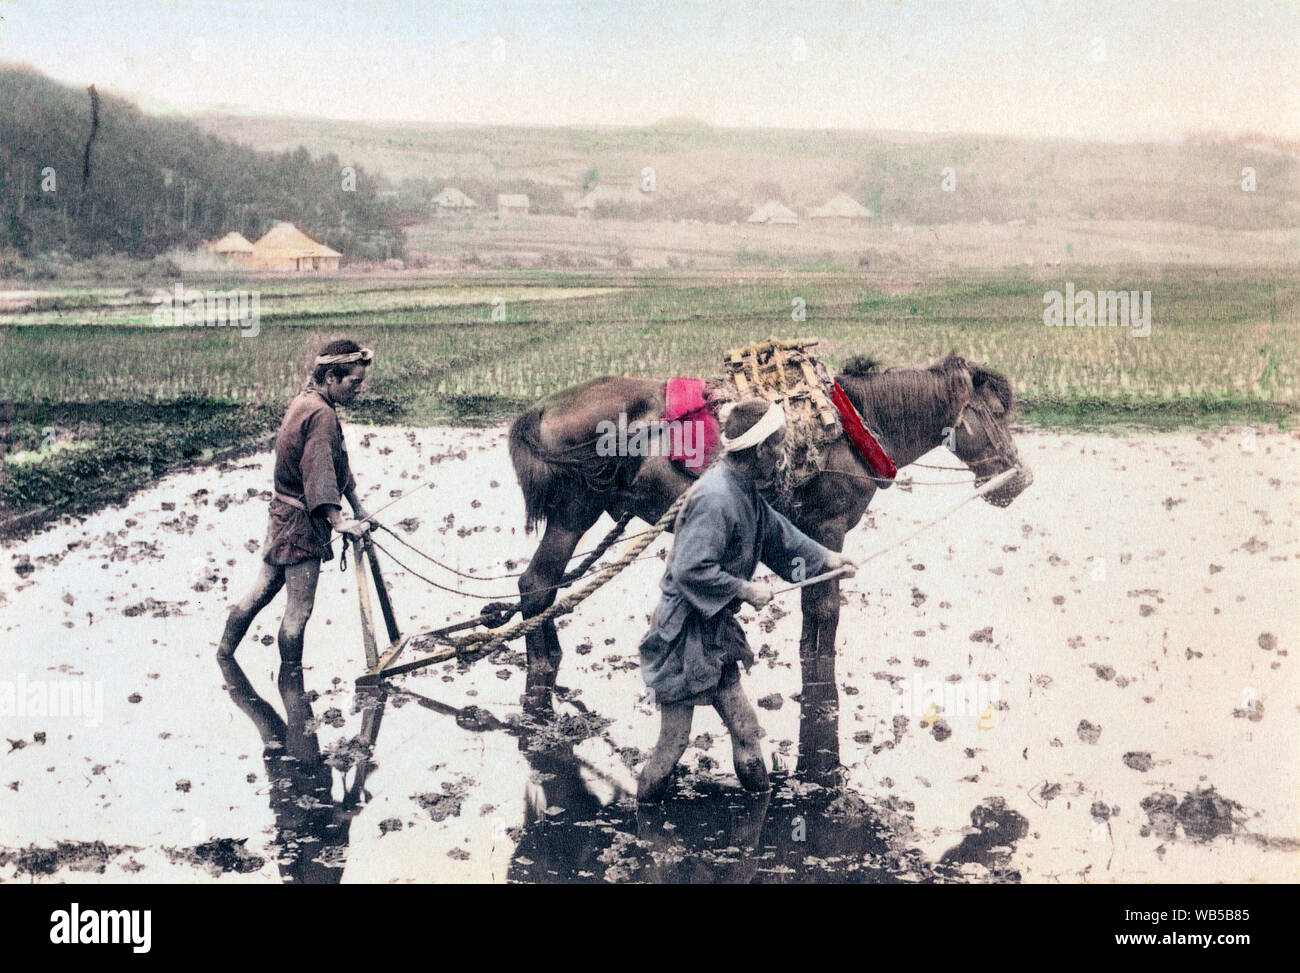 [ 1890s Japan - Japanese Farmer Plowing a Rice Field ] —   Farmers are ploughing a rice field with a horse.  19th century vintage albumen photograph. Stock Photo